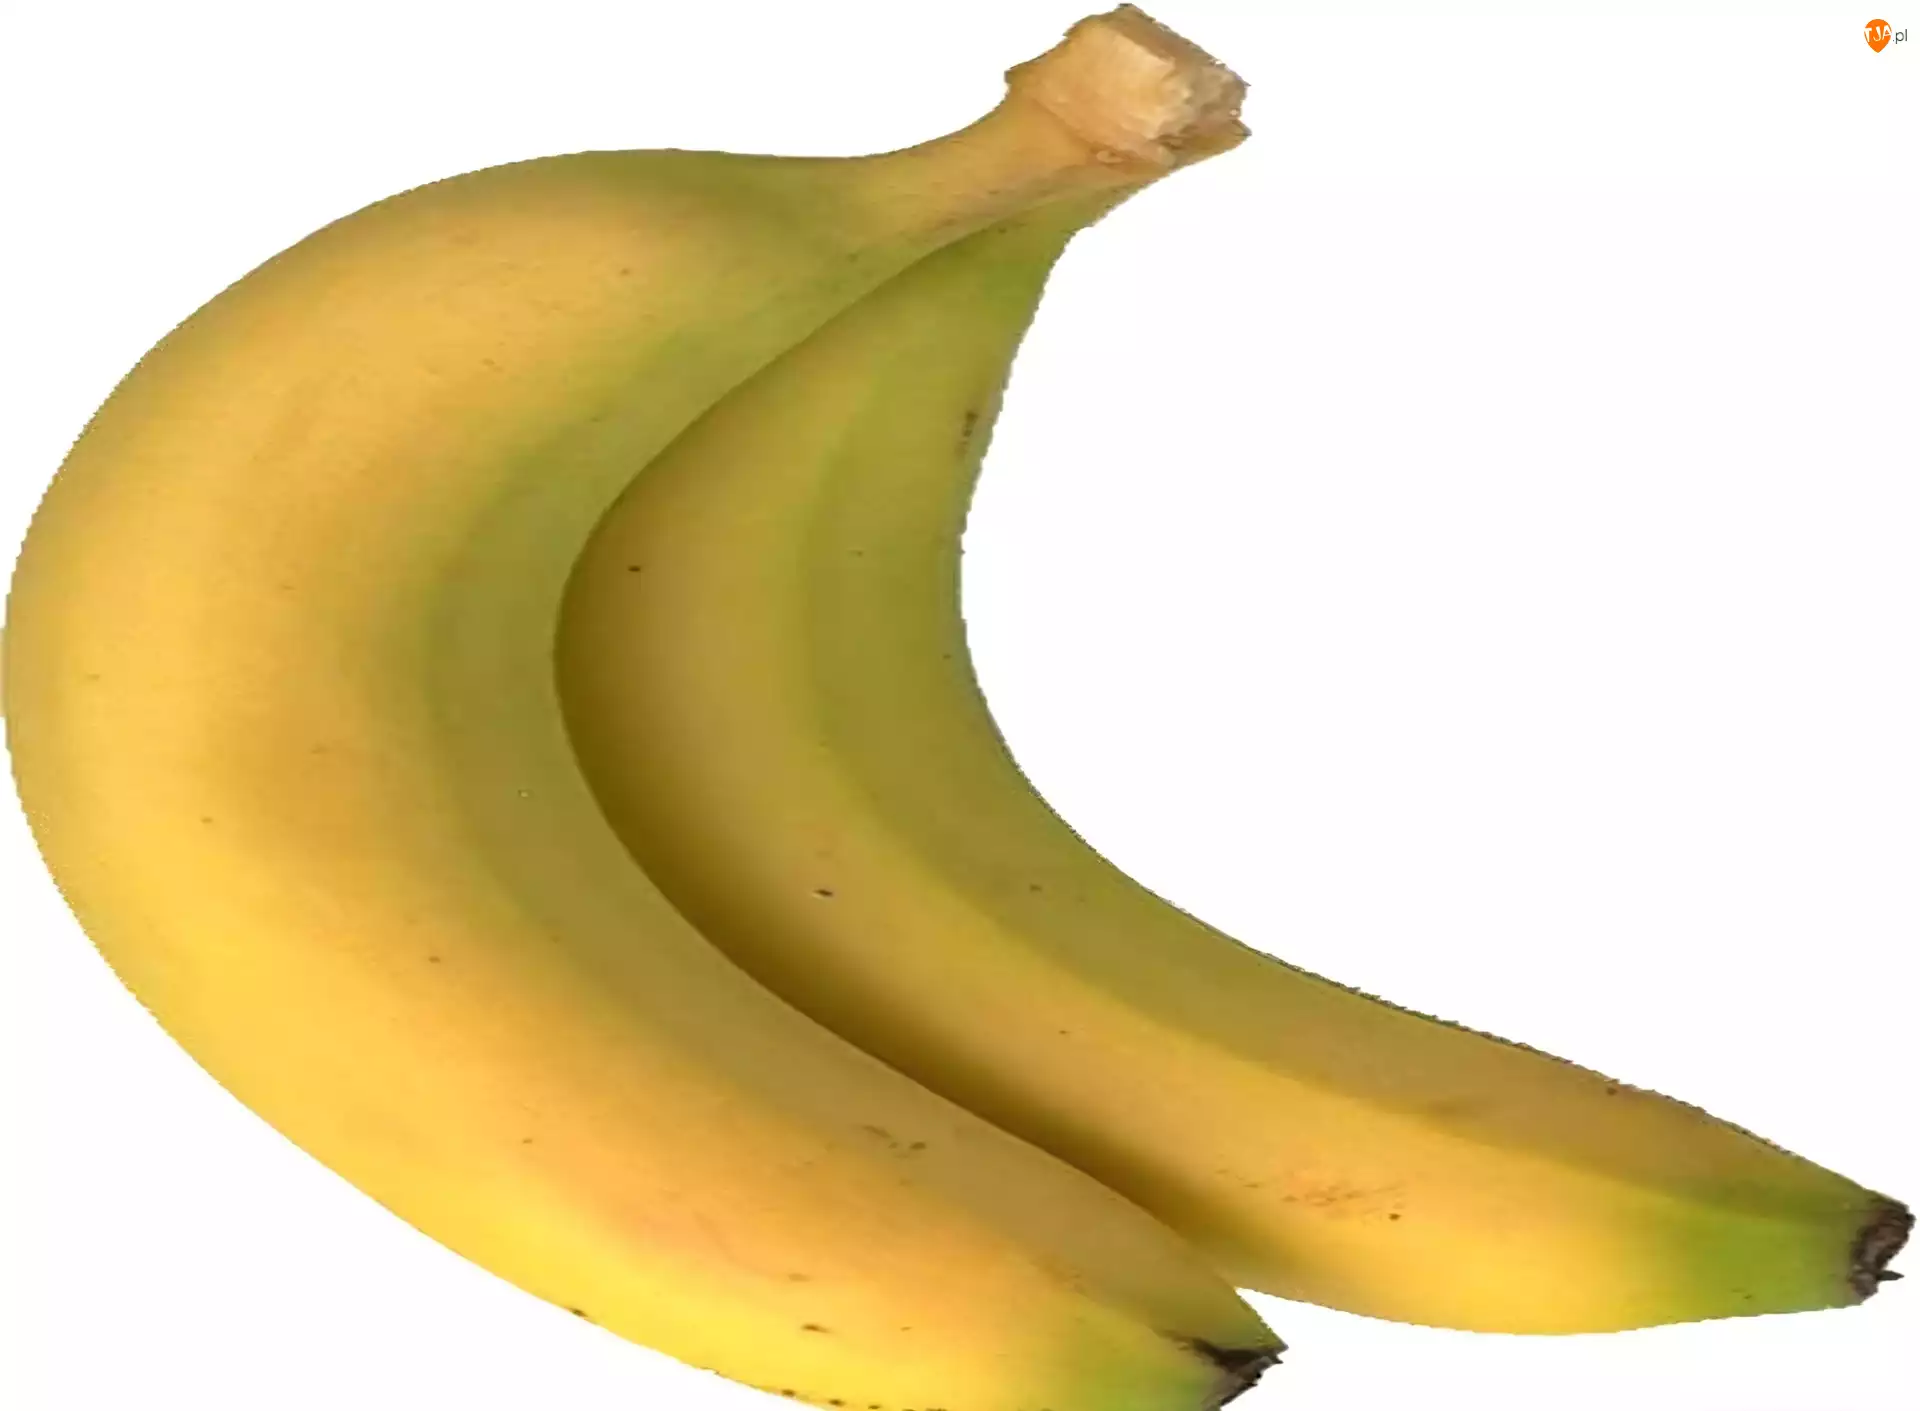 Banany, Dwa